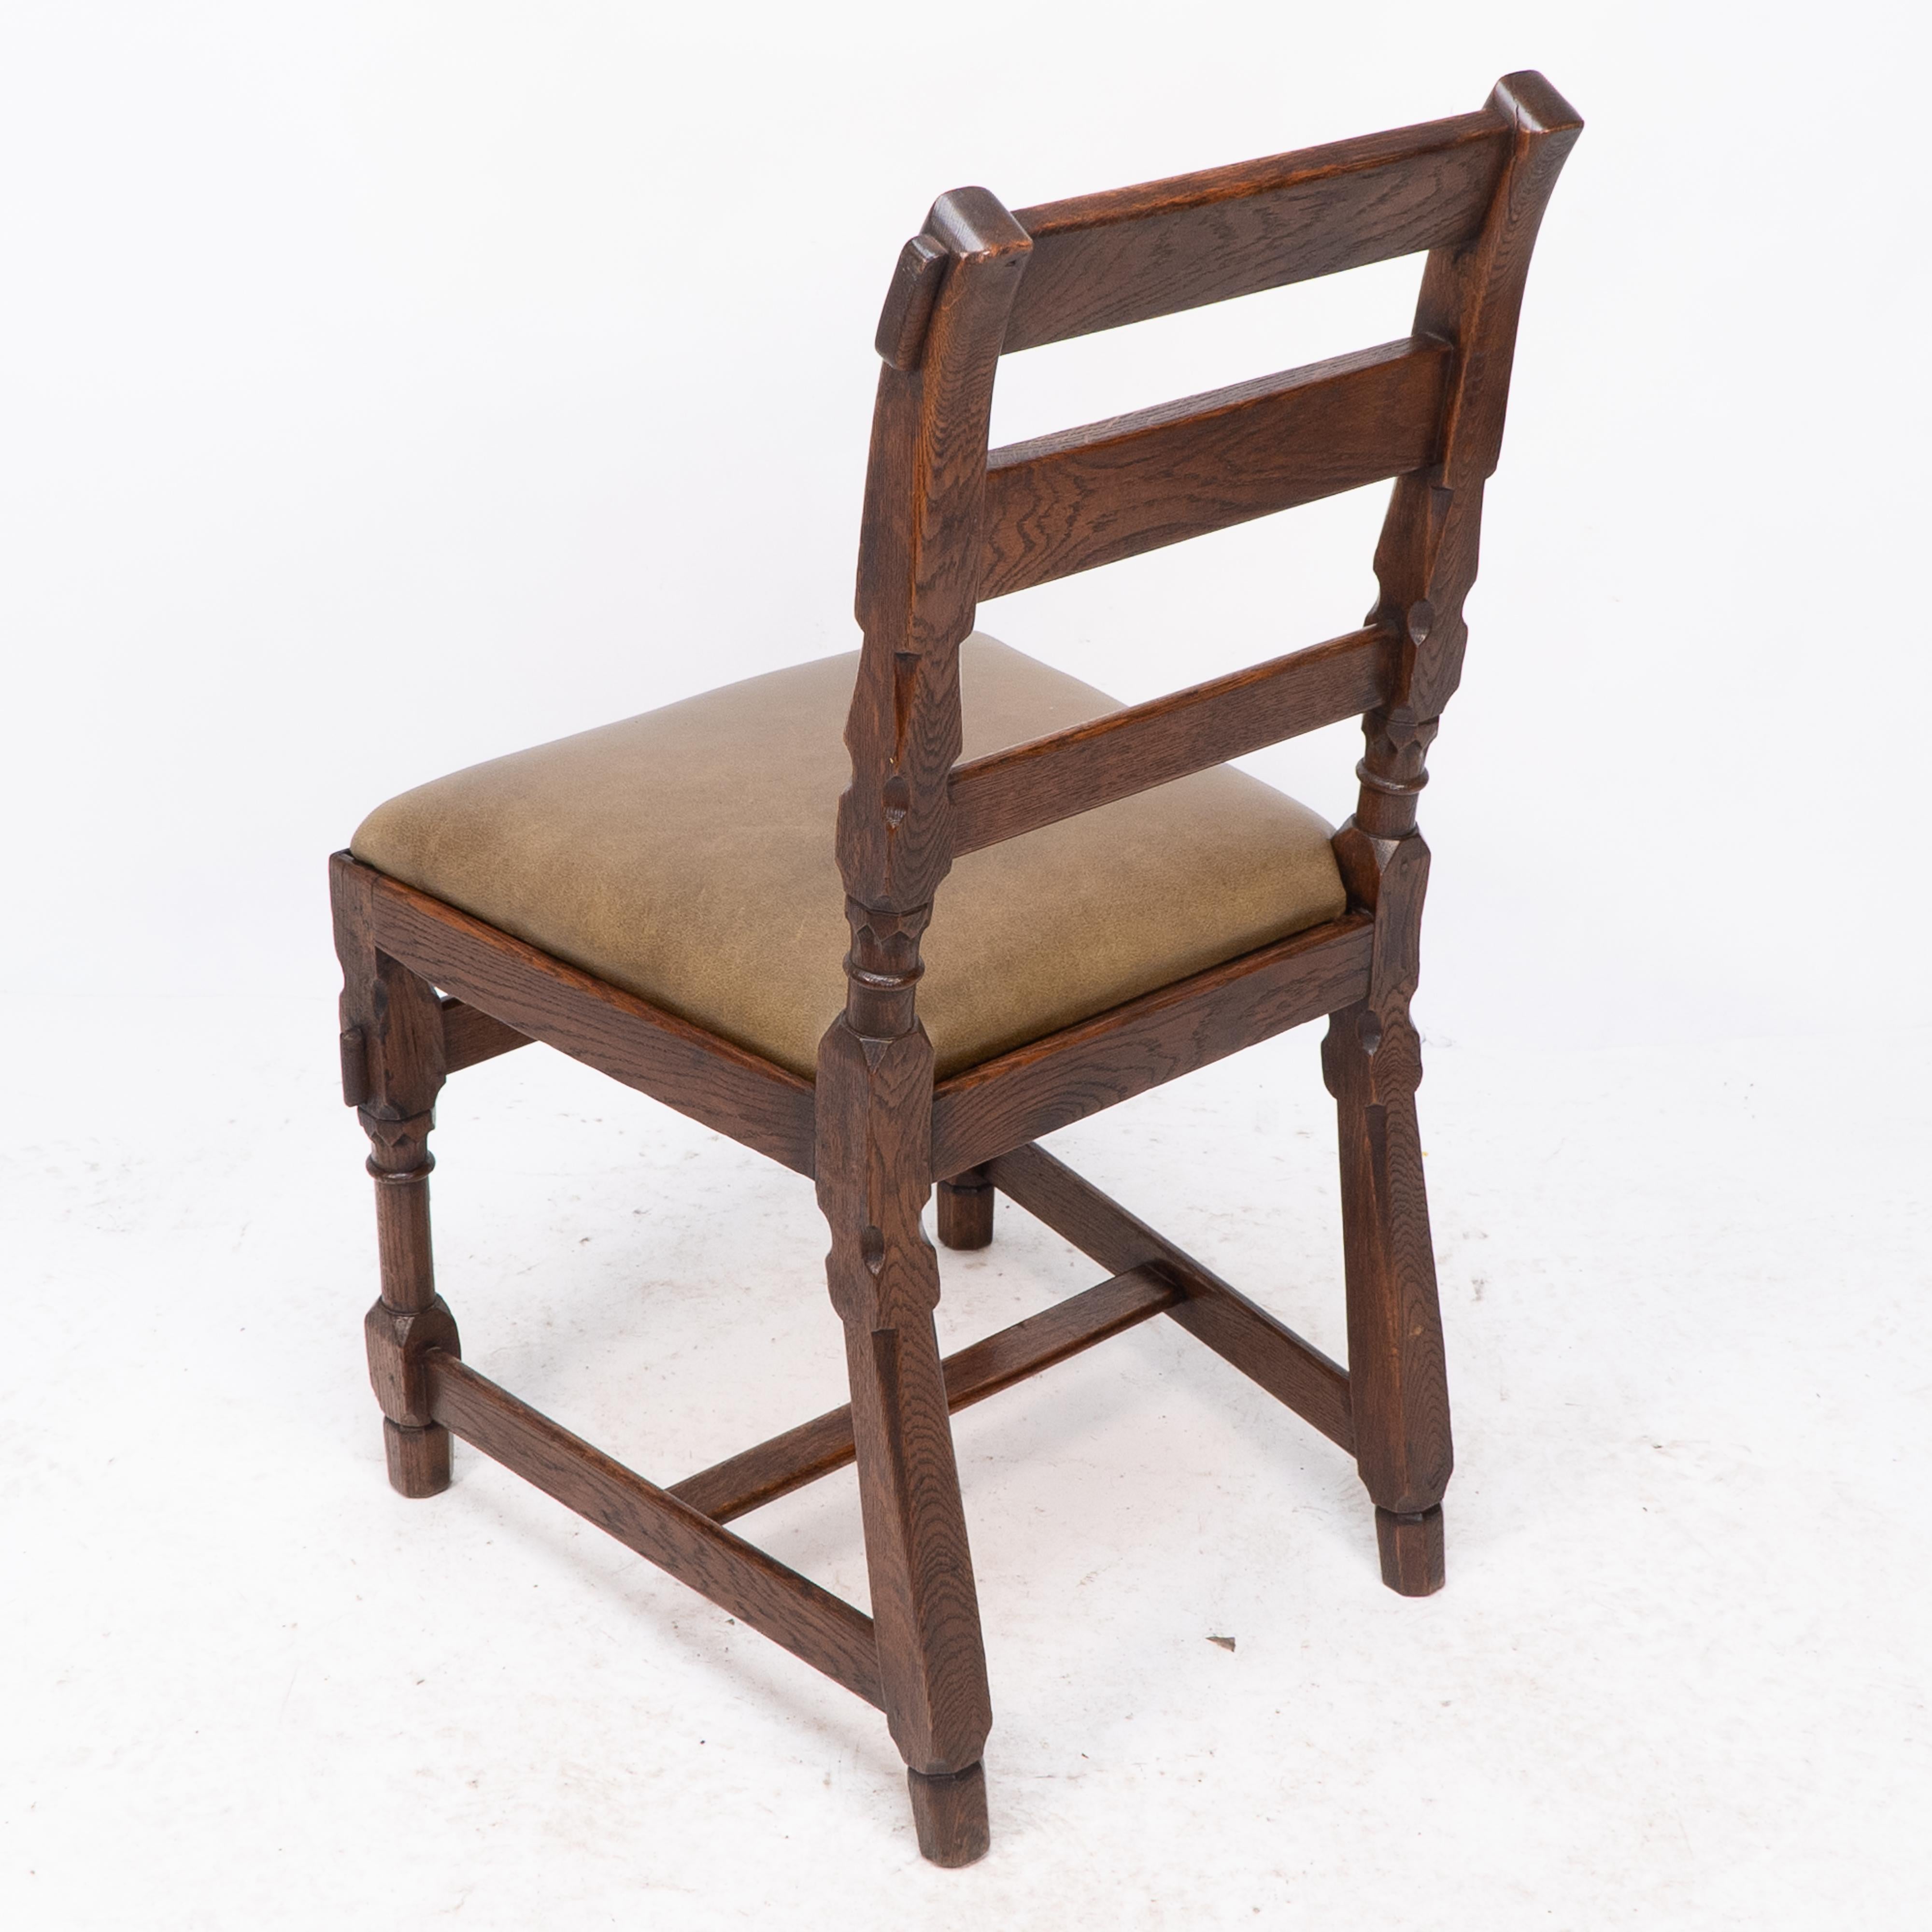 J P Seddon attri. An Aesthetic Movement oak side chair with ebonized circles For Sale 9